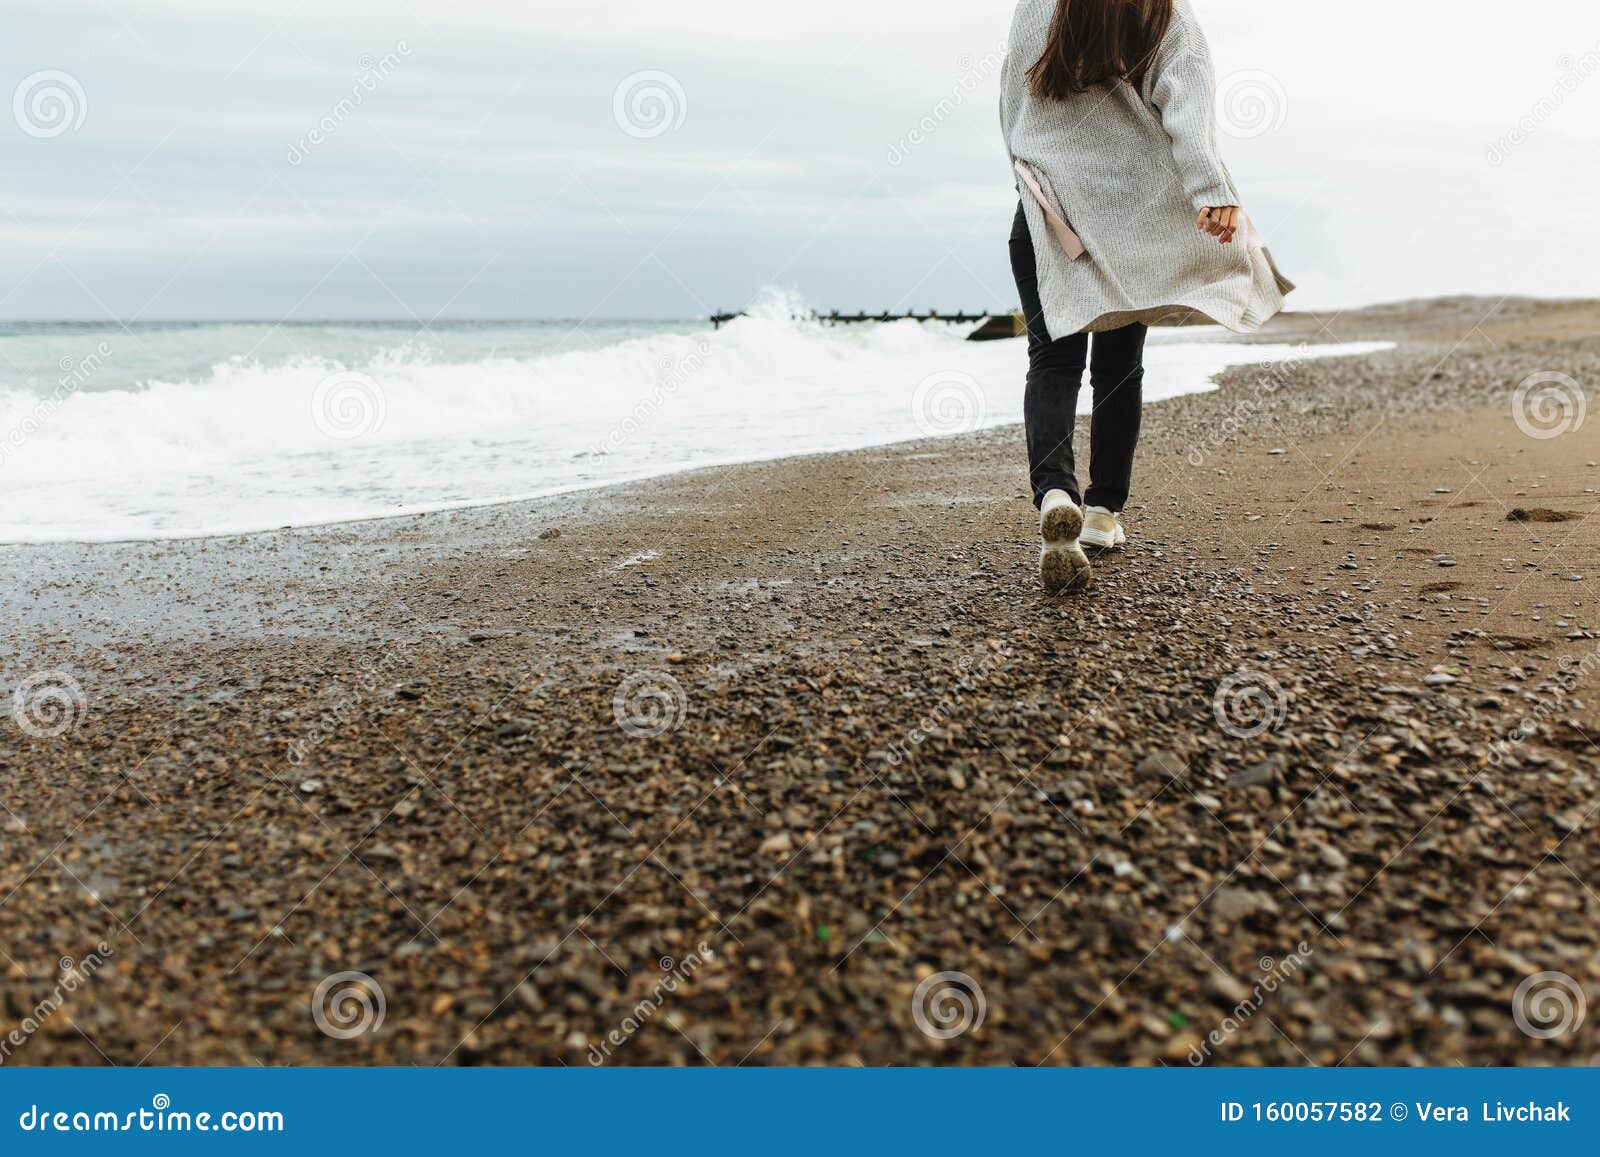 Фото На Море Осенью Девушки